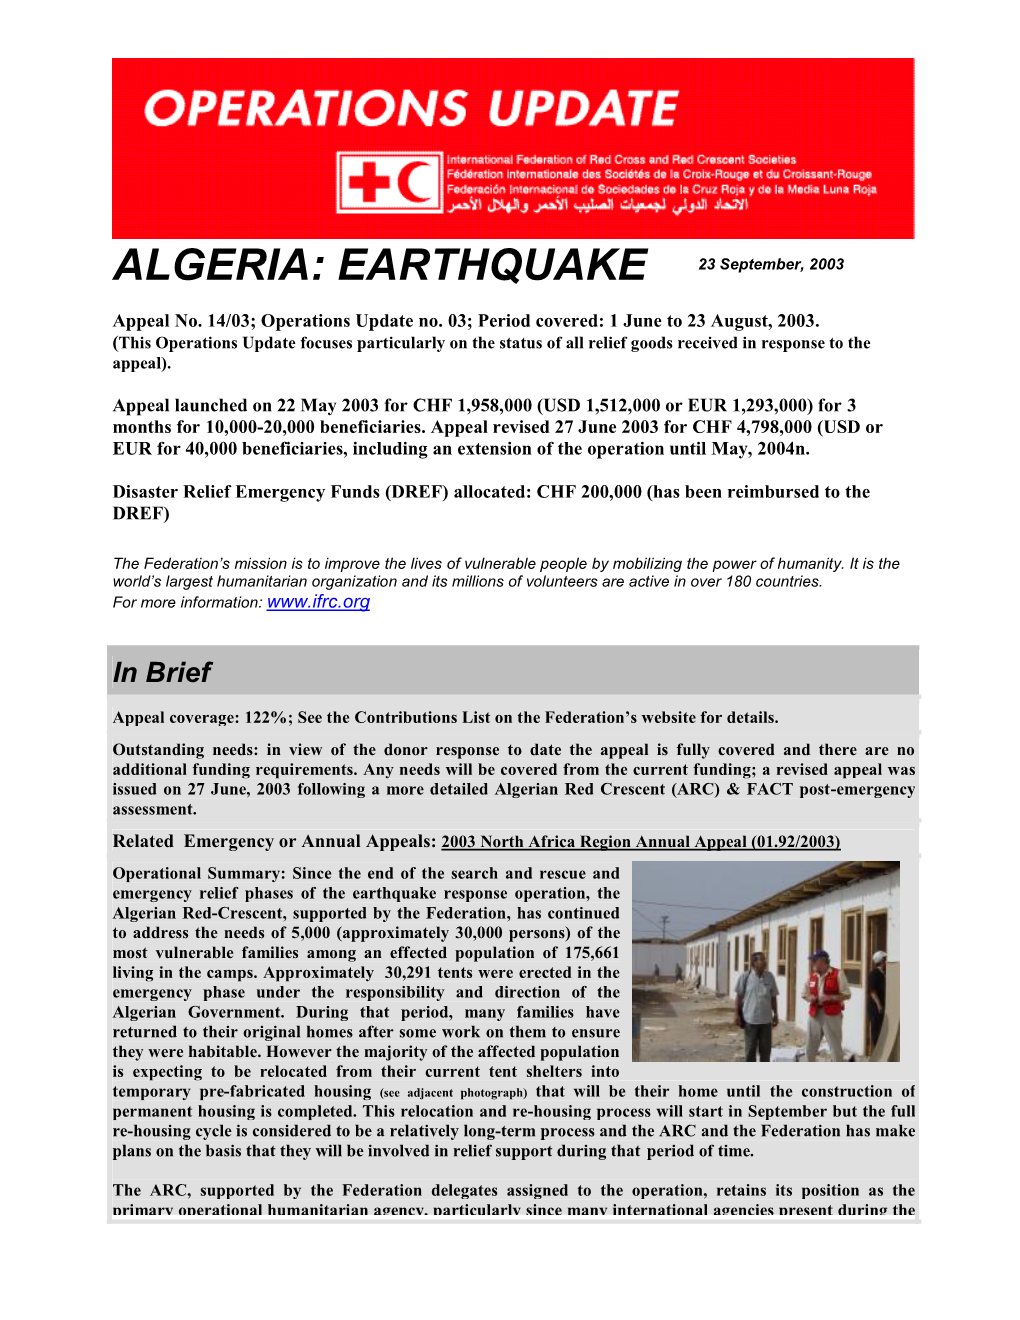 ALGERIA: EARTHQUAKE 23 September, 2003